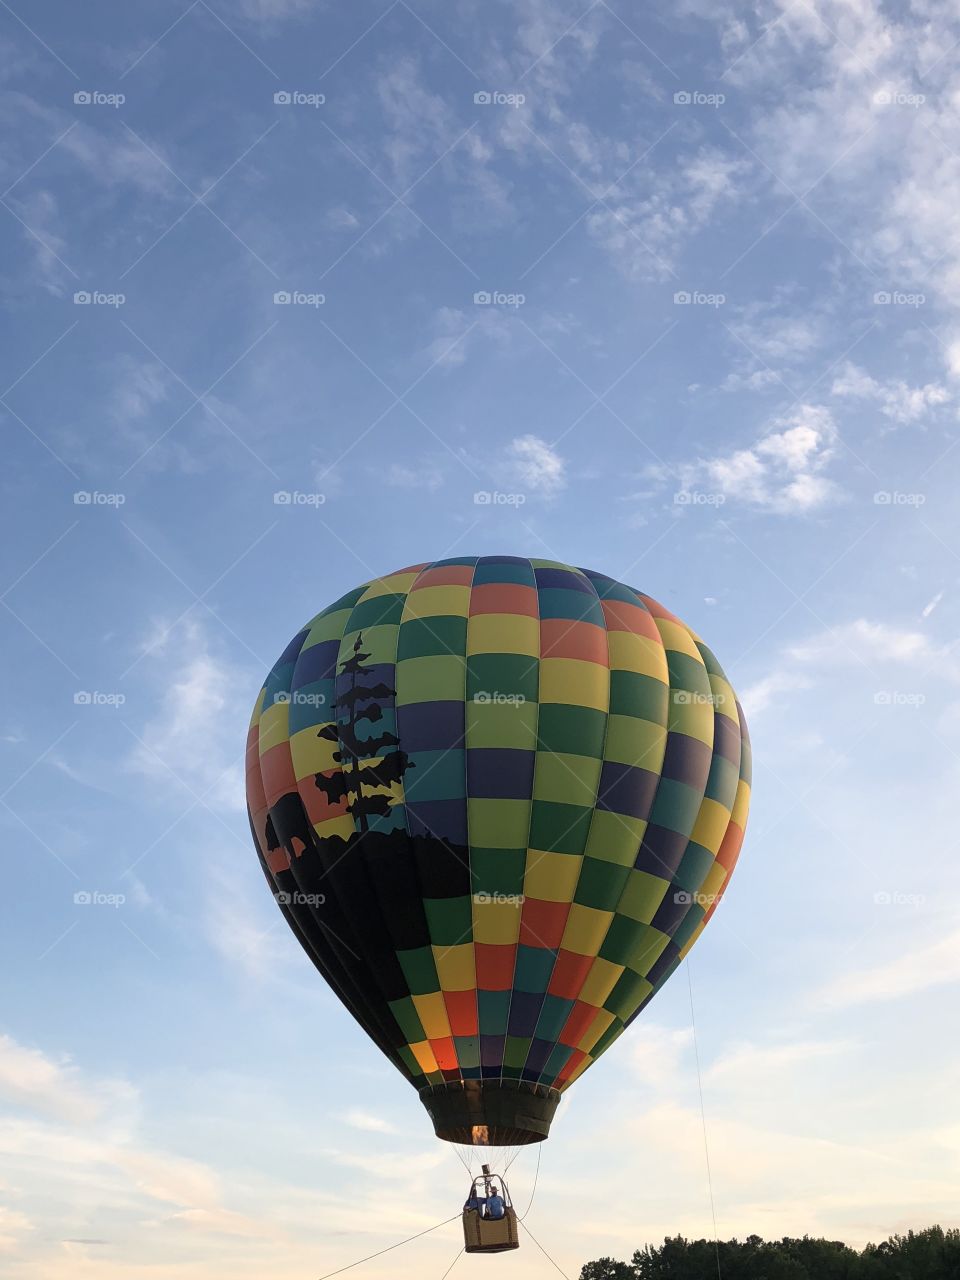 Balloon in the summer sky